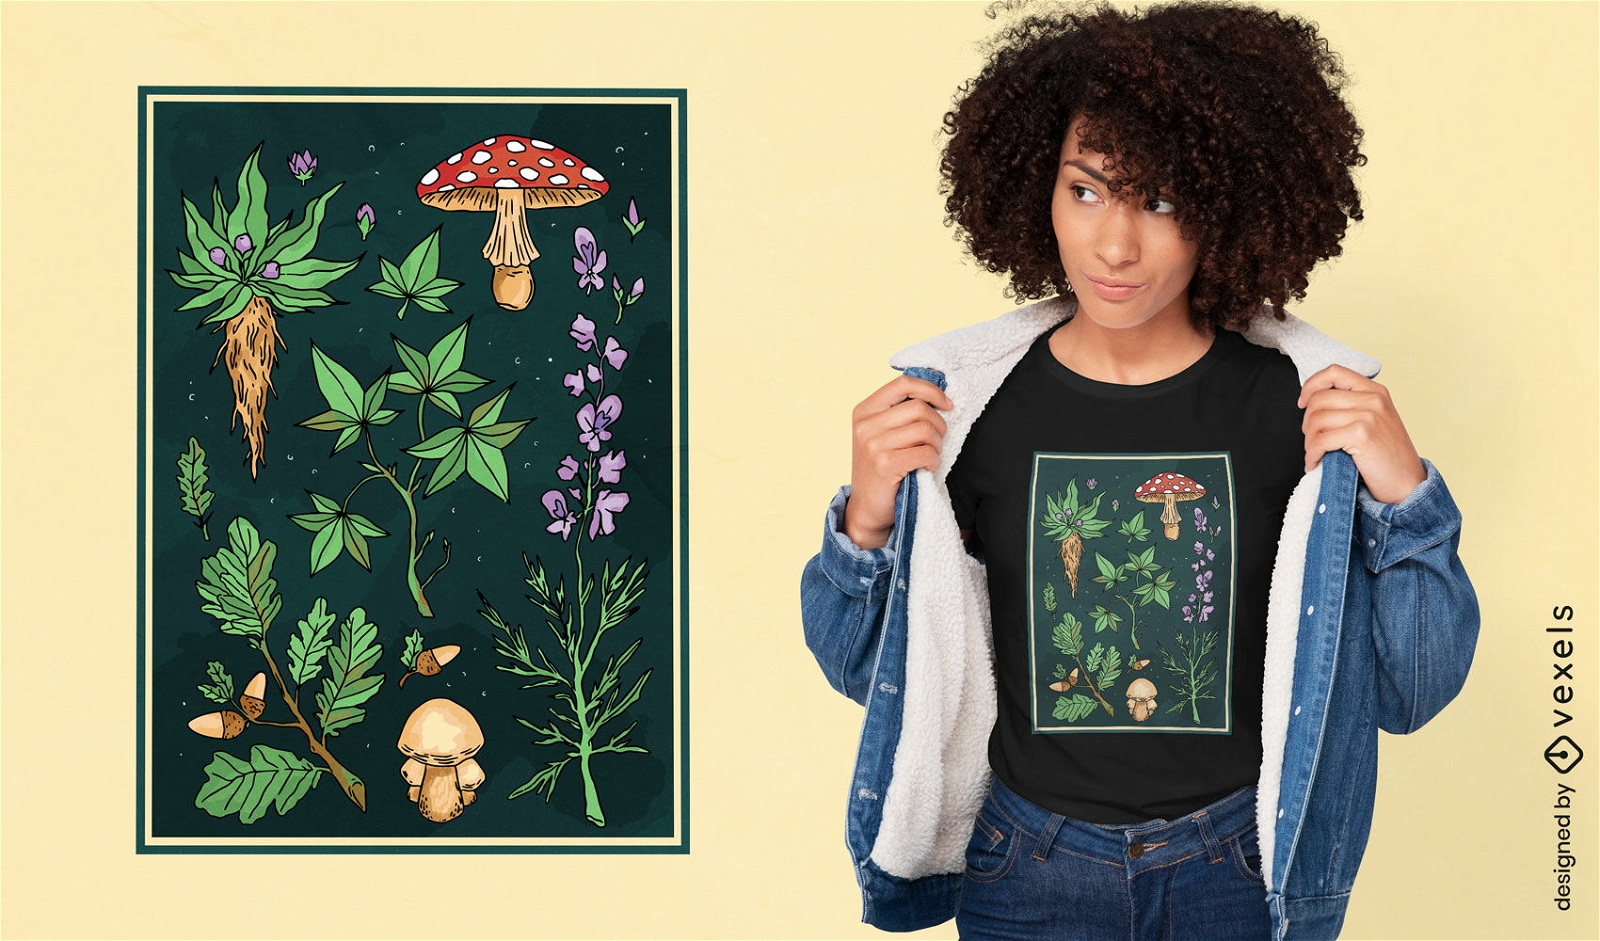 Diseño de camiseta de elementos de jardín botánico.